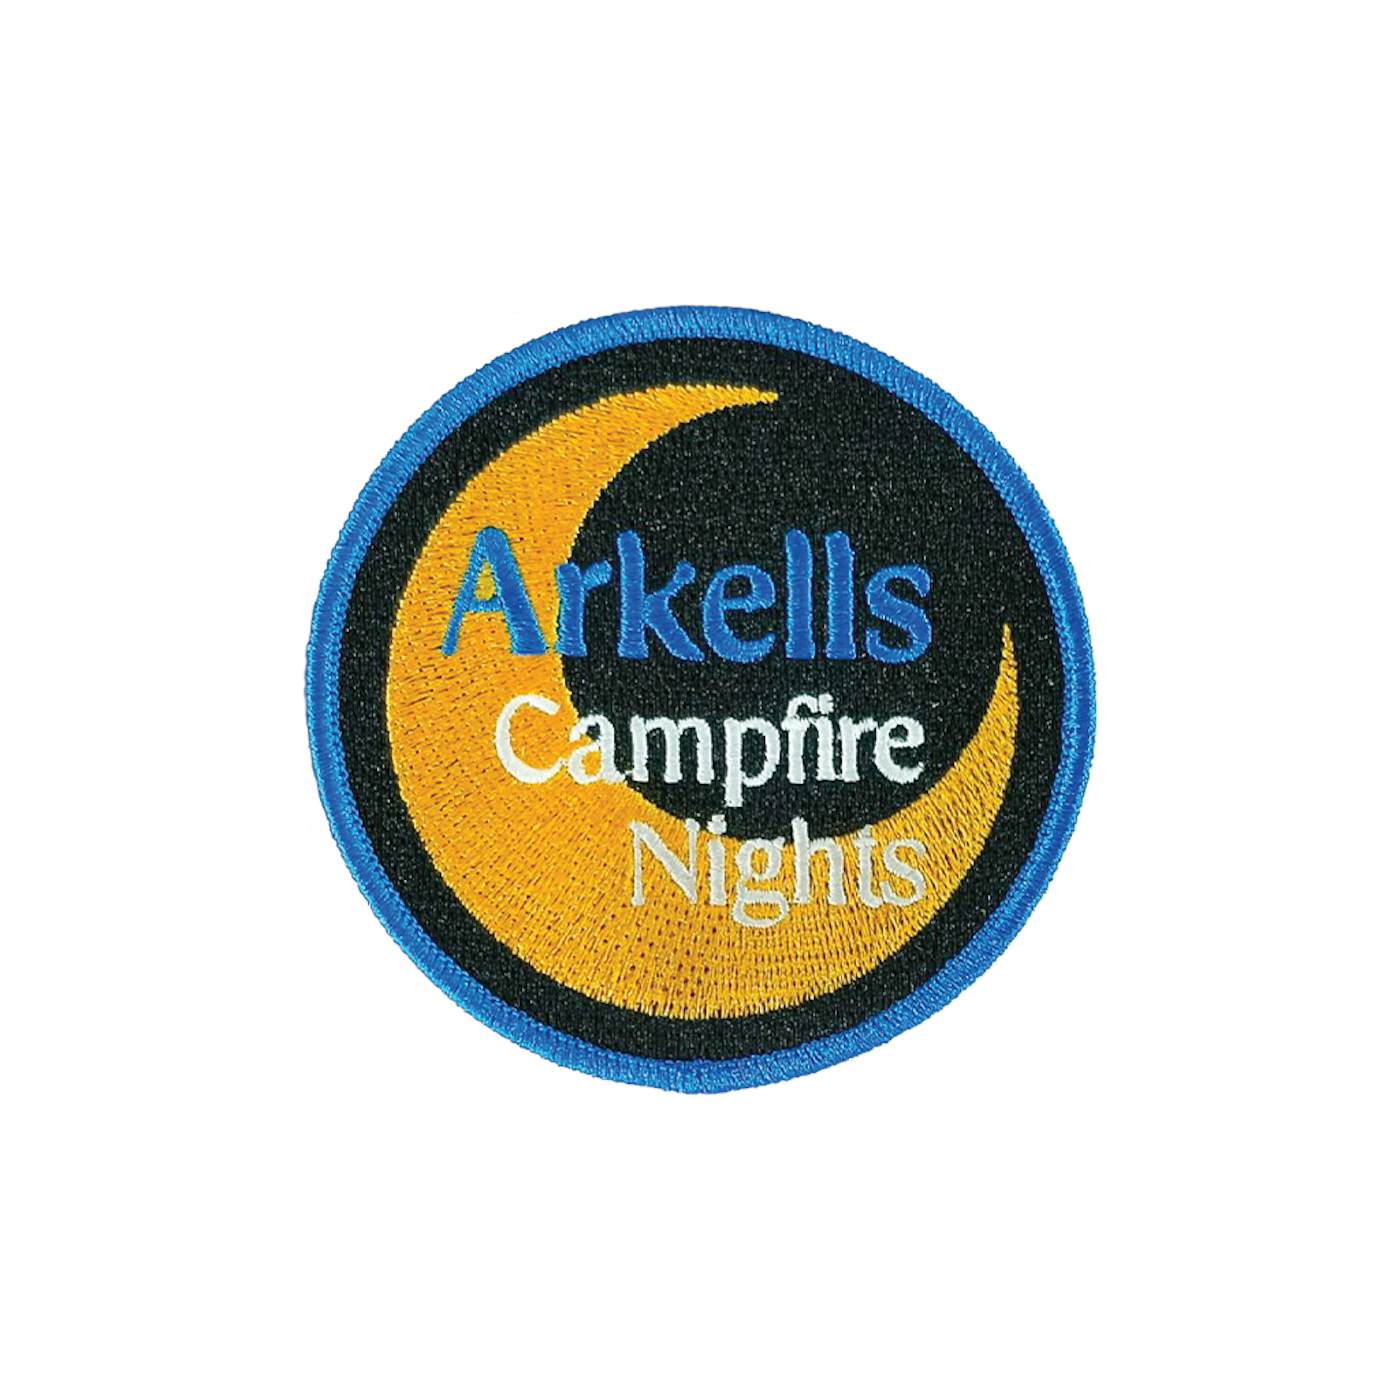 Arkells Campfire Nights Patch